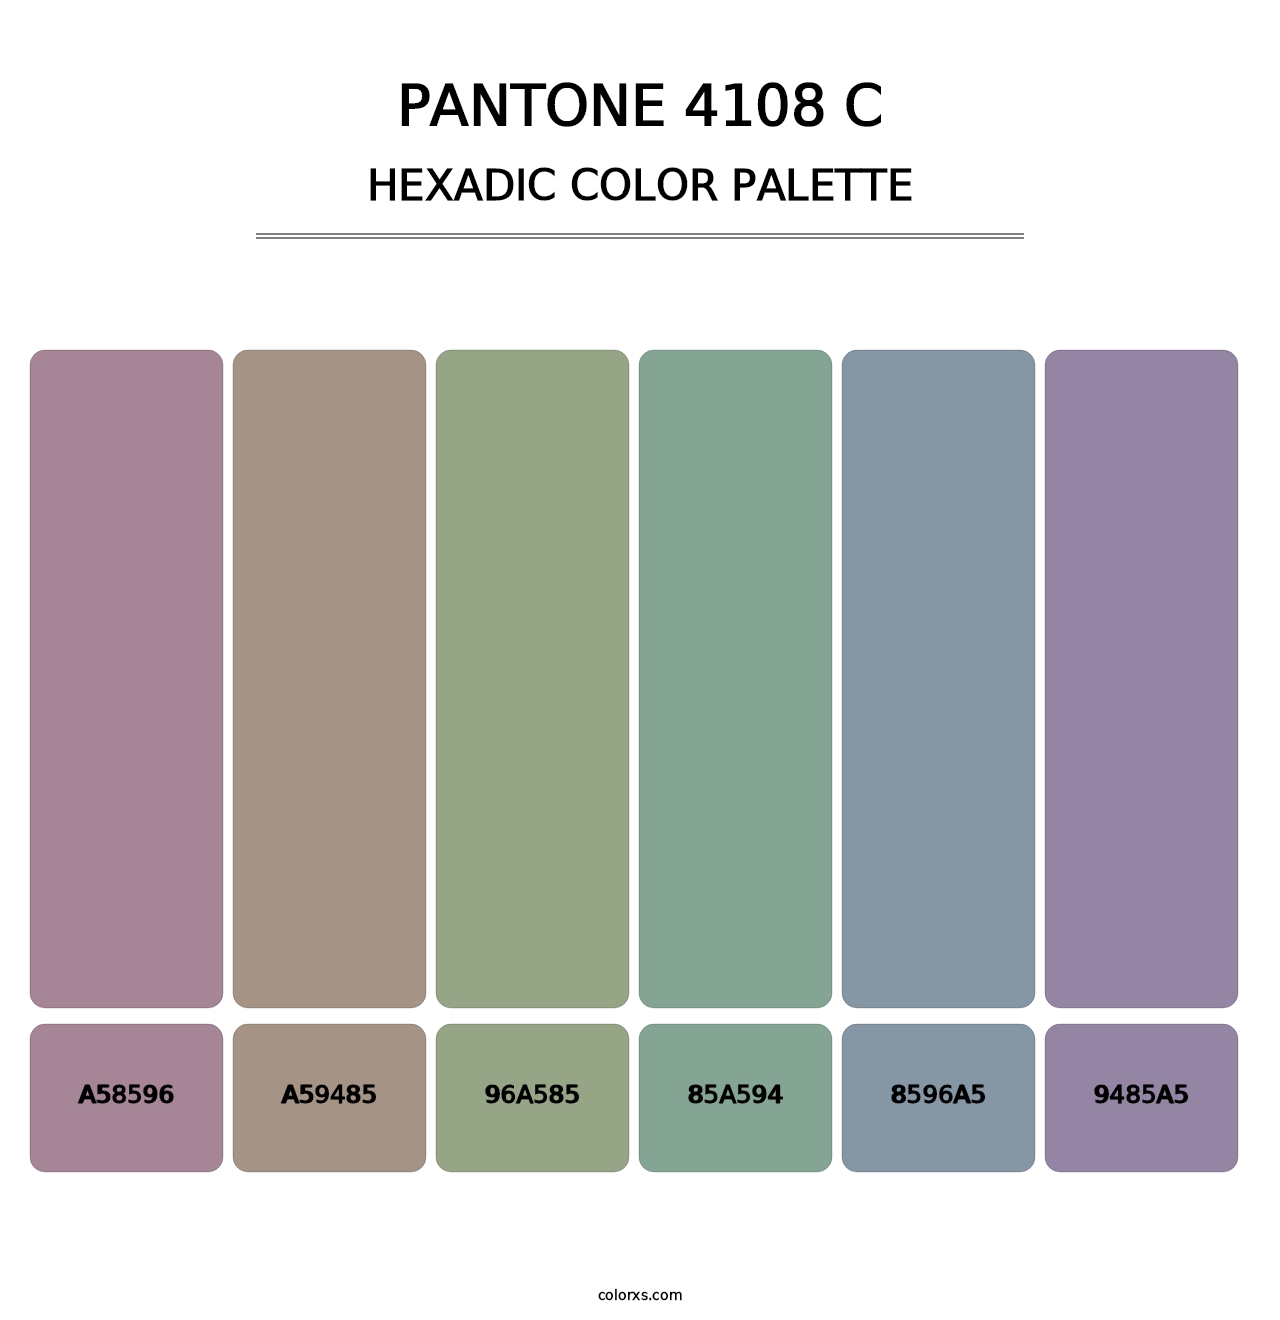 PANTONE 4108 C - Hexadic Color Palette